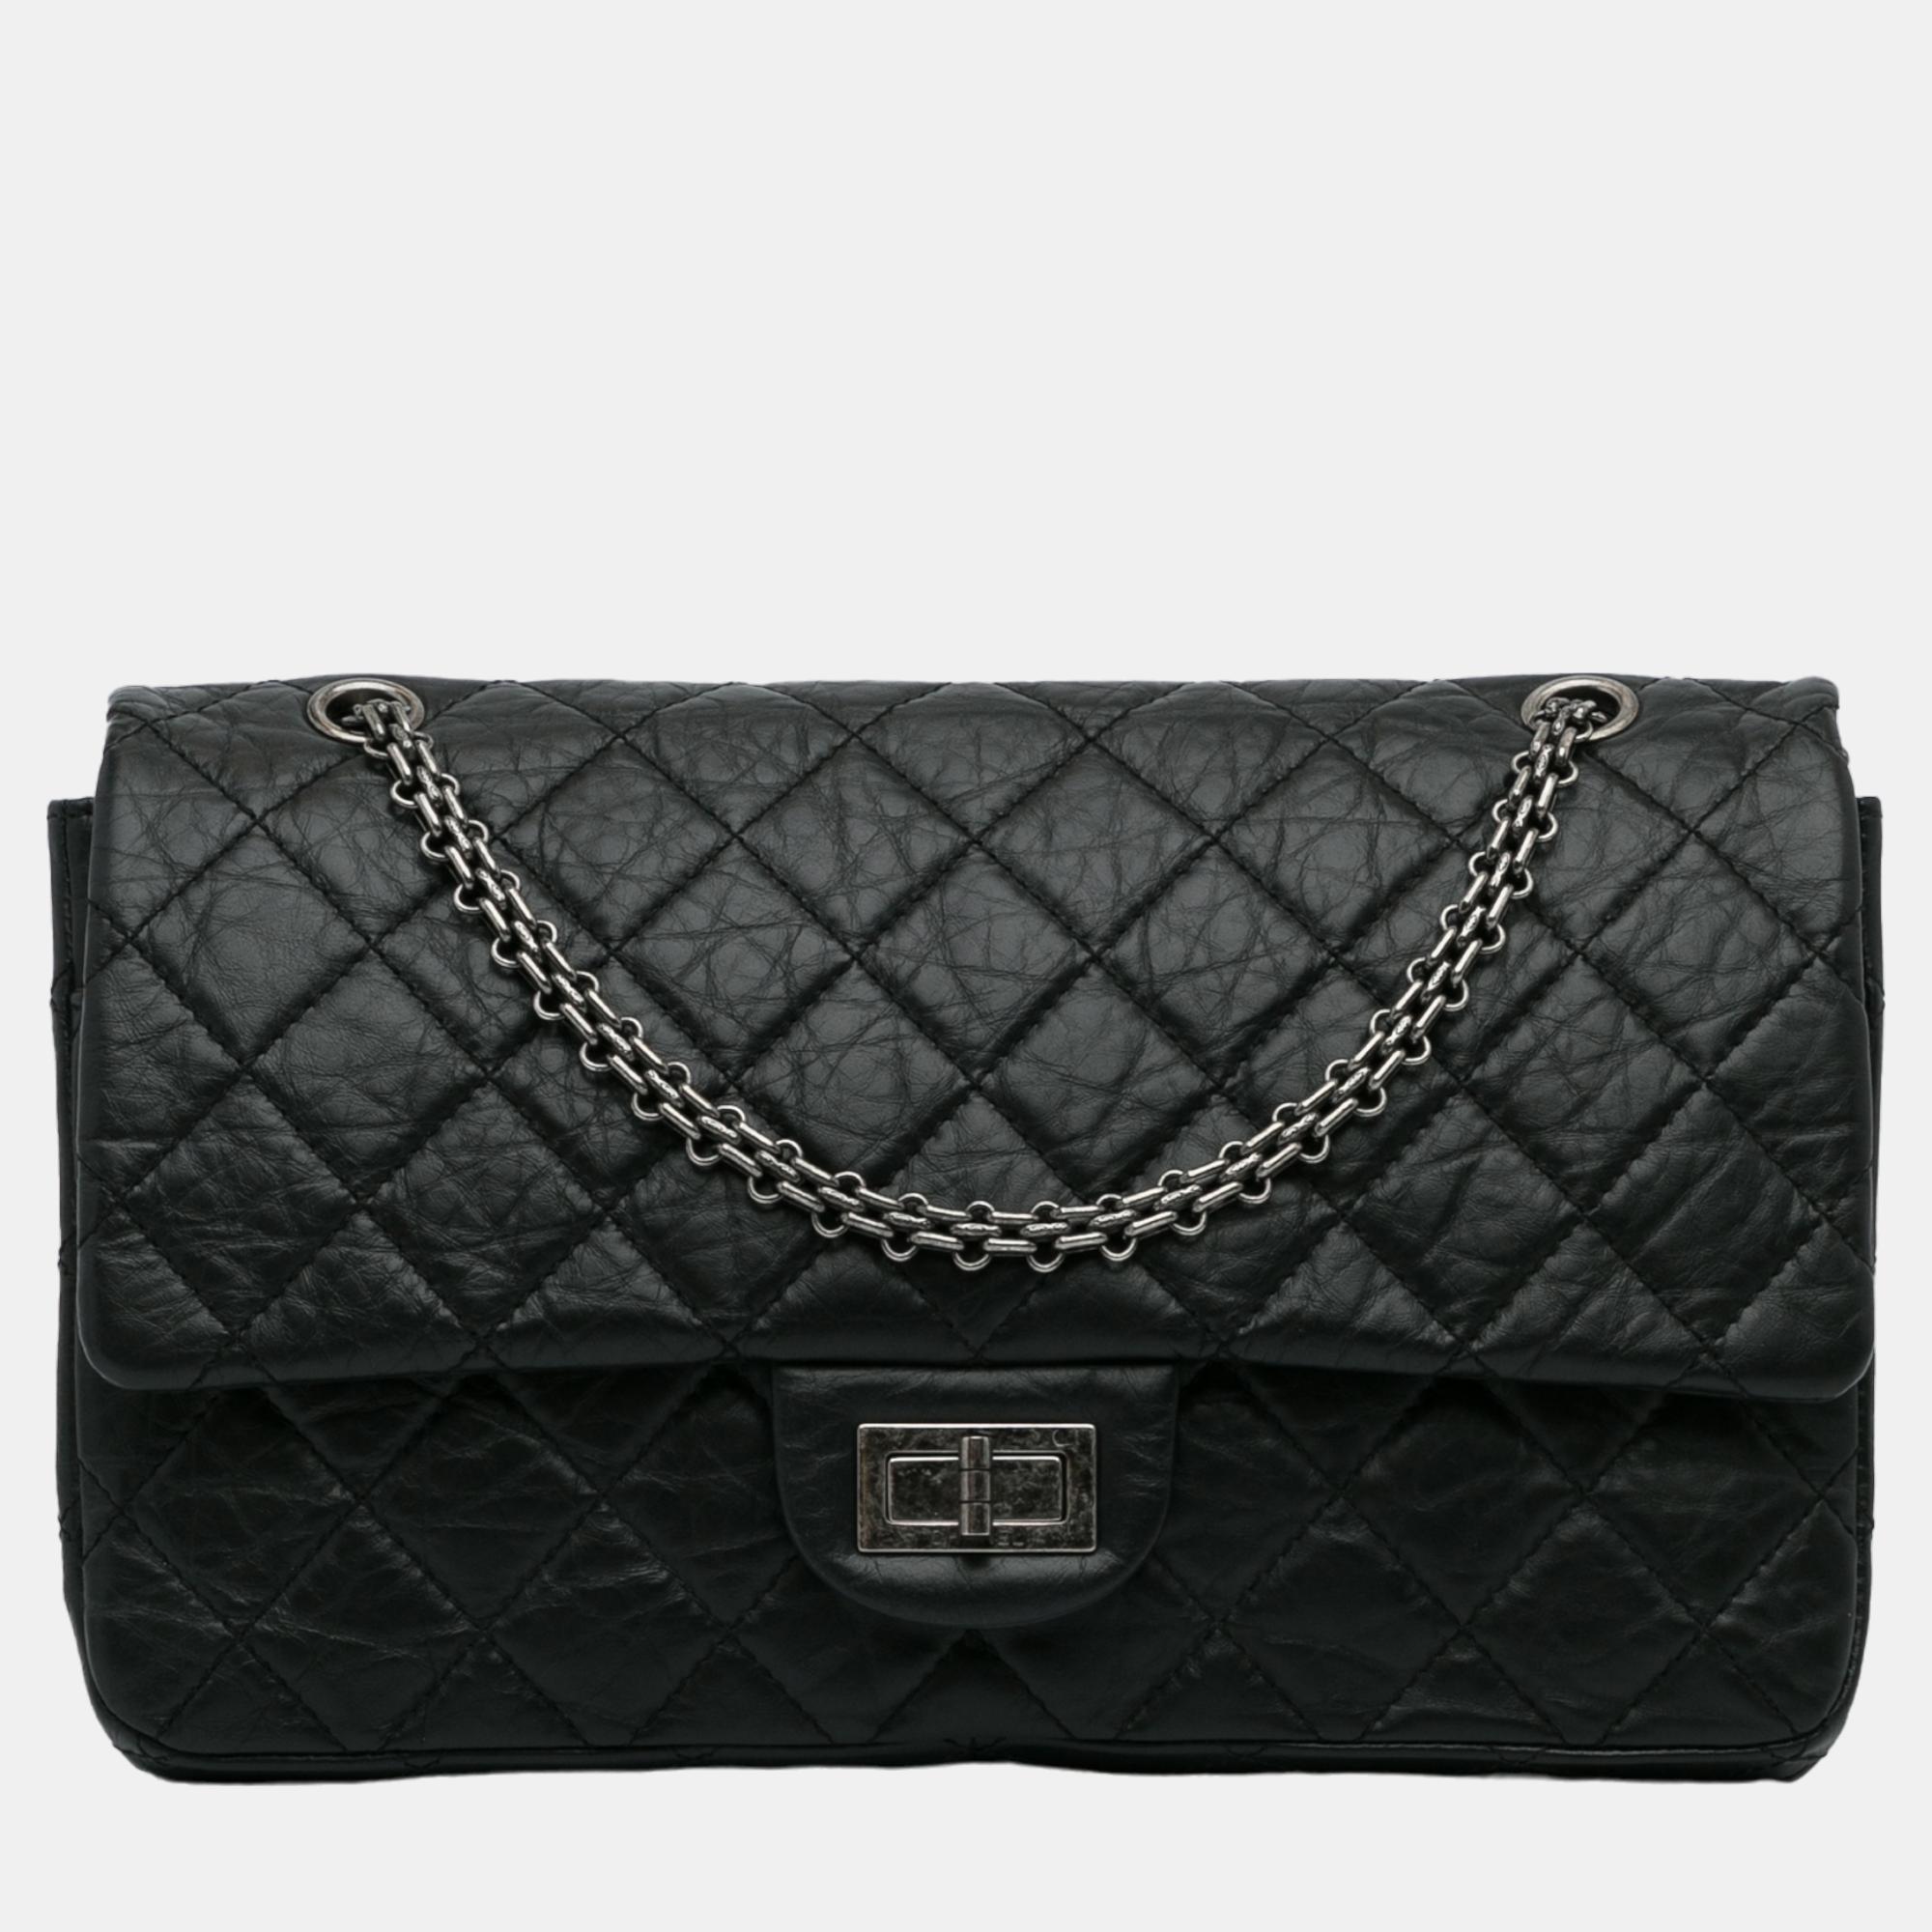 Chanel black reissue 2.55 aged calfskin double flap 227